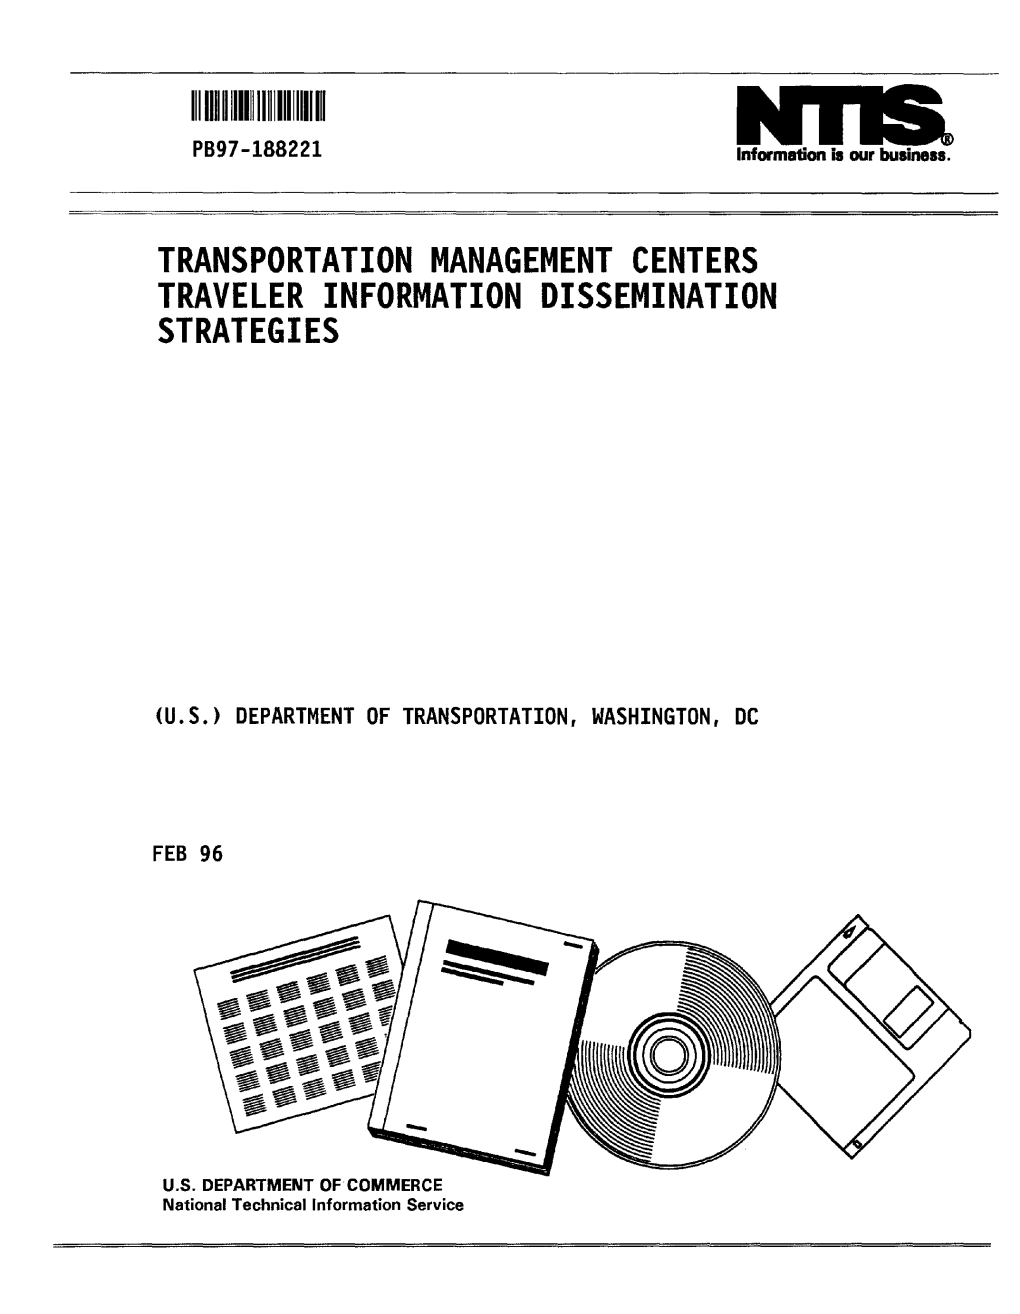 Transportation Management Centers Traveler Information Dissemination Strategies